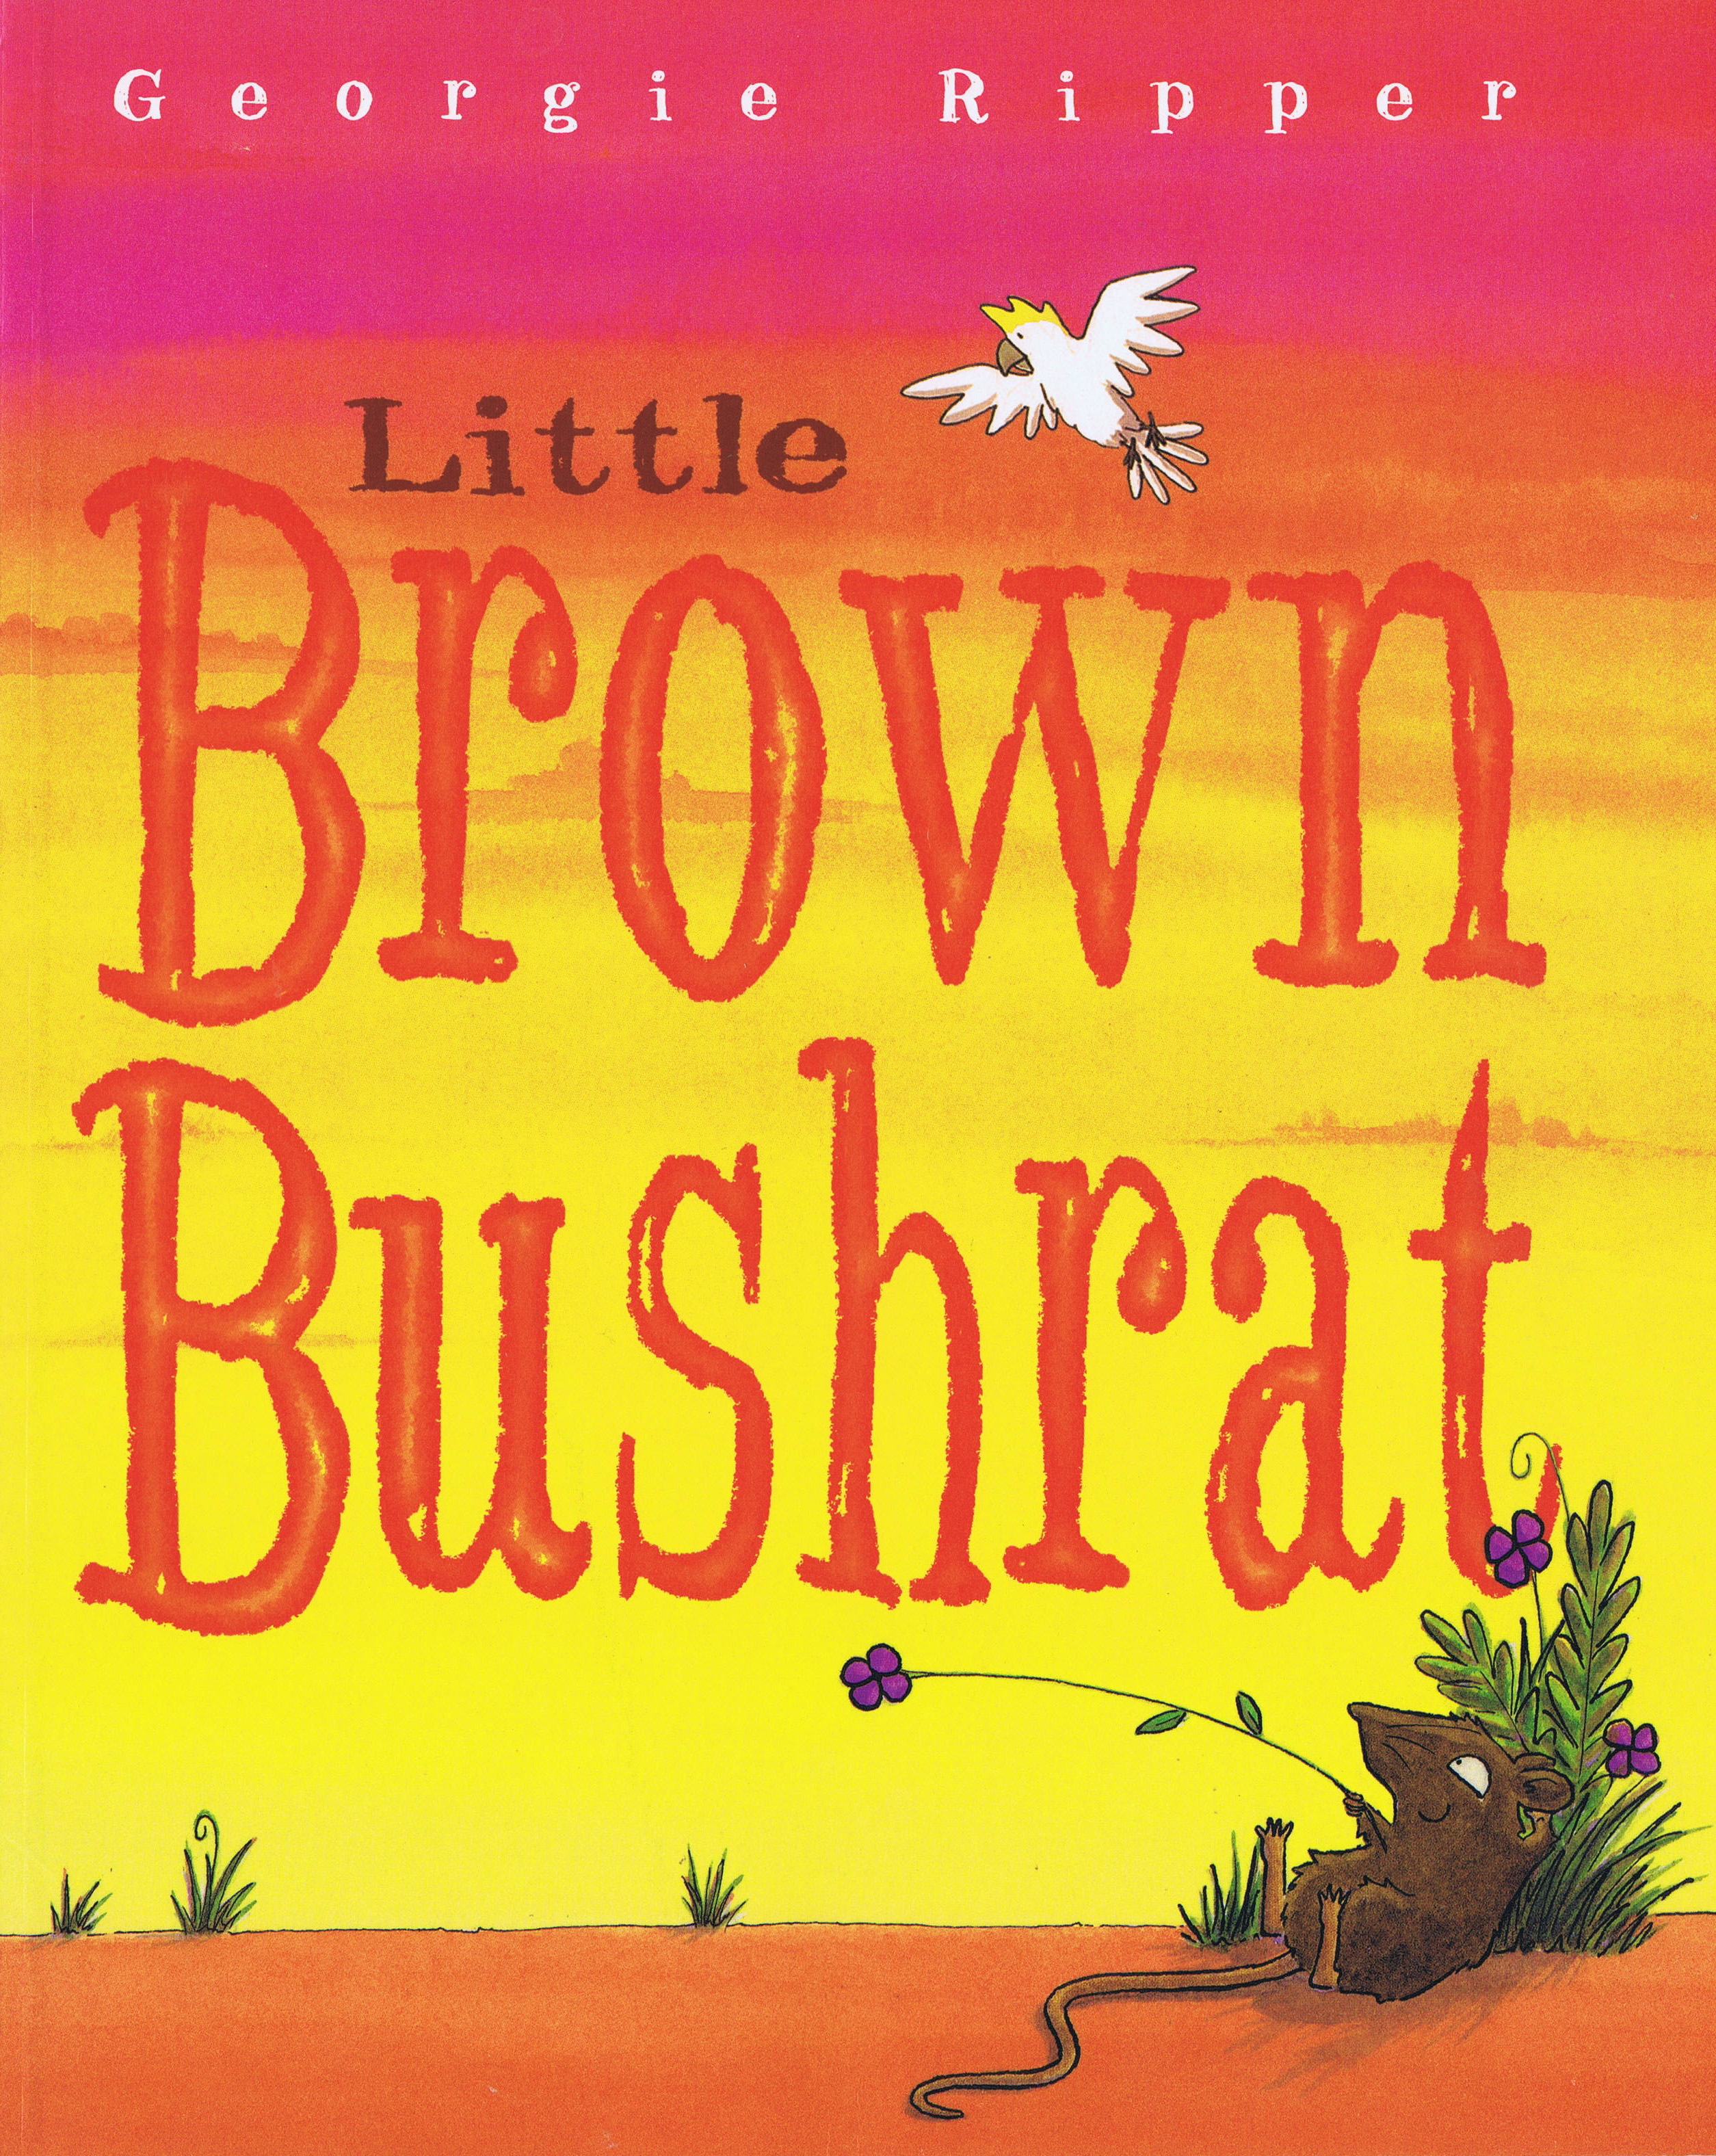 Little Brown Bushrat